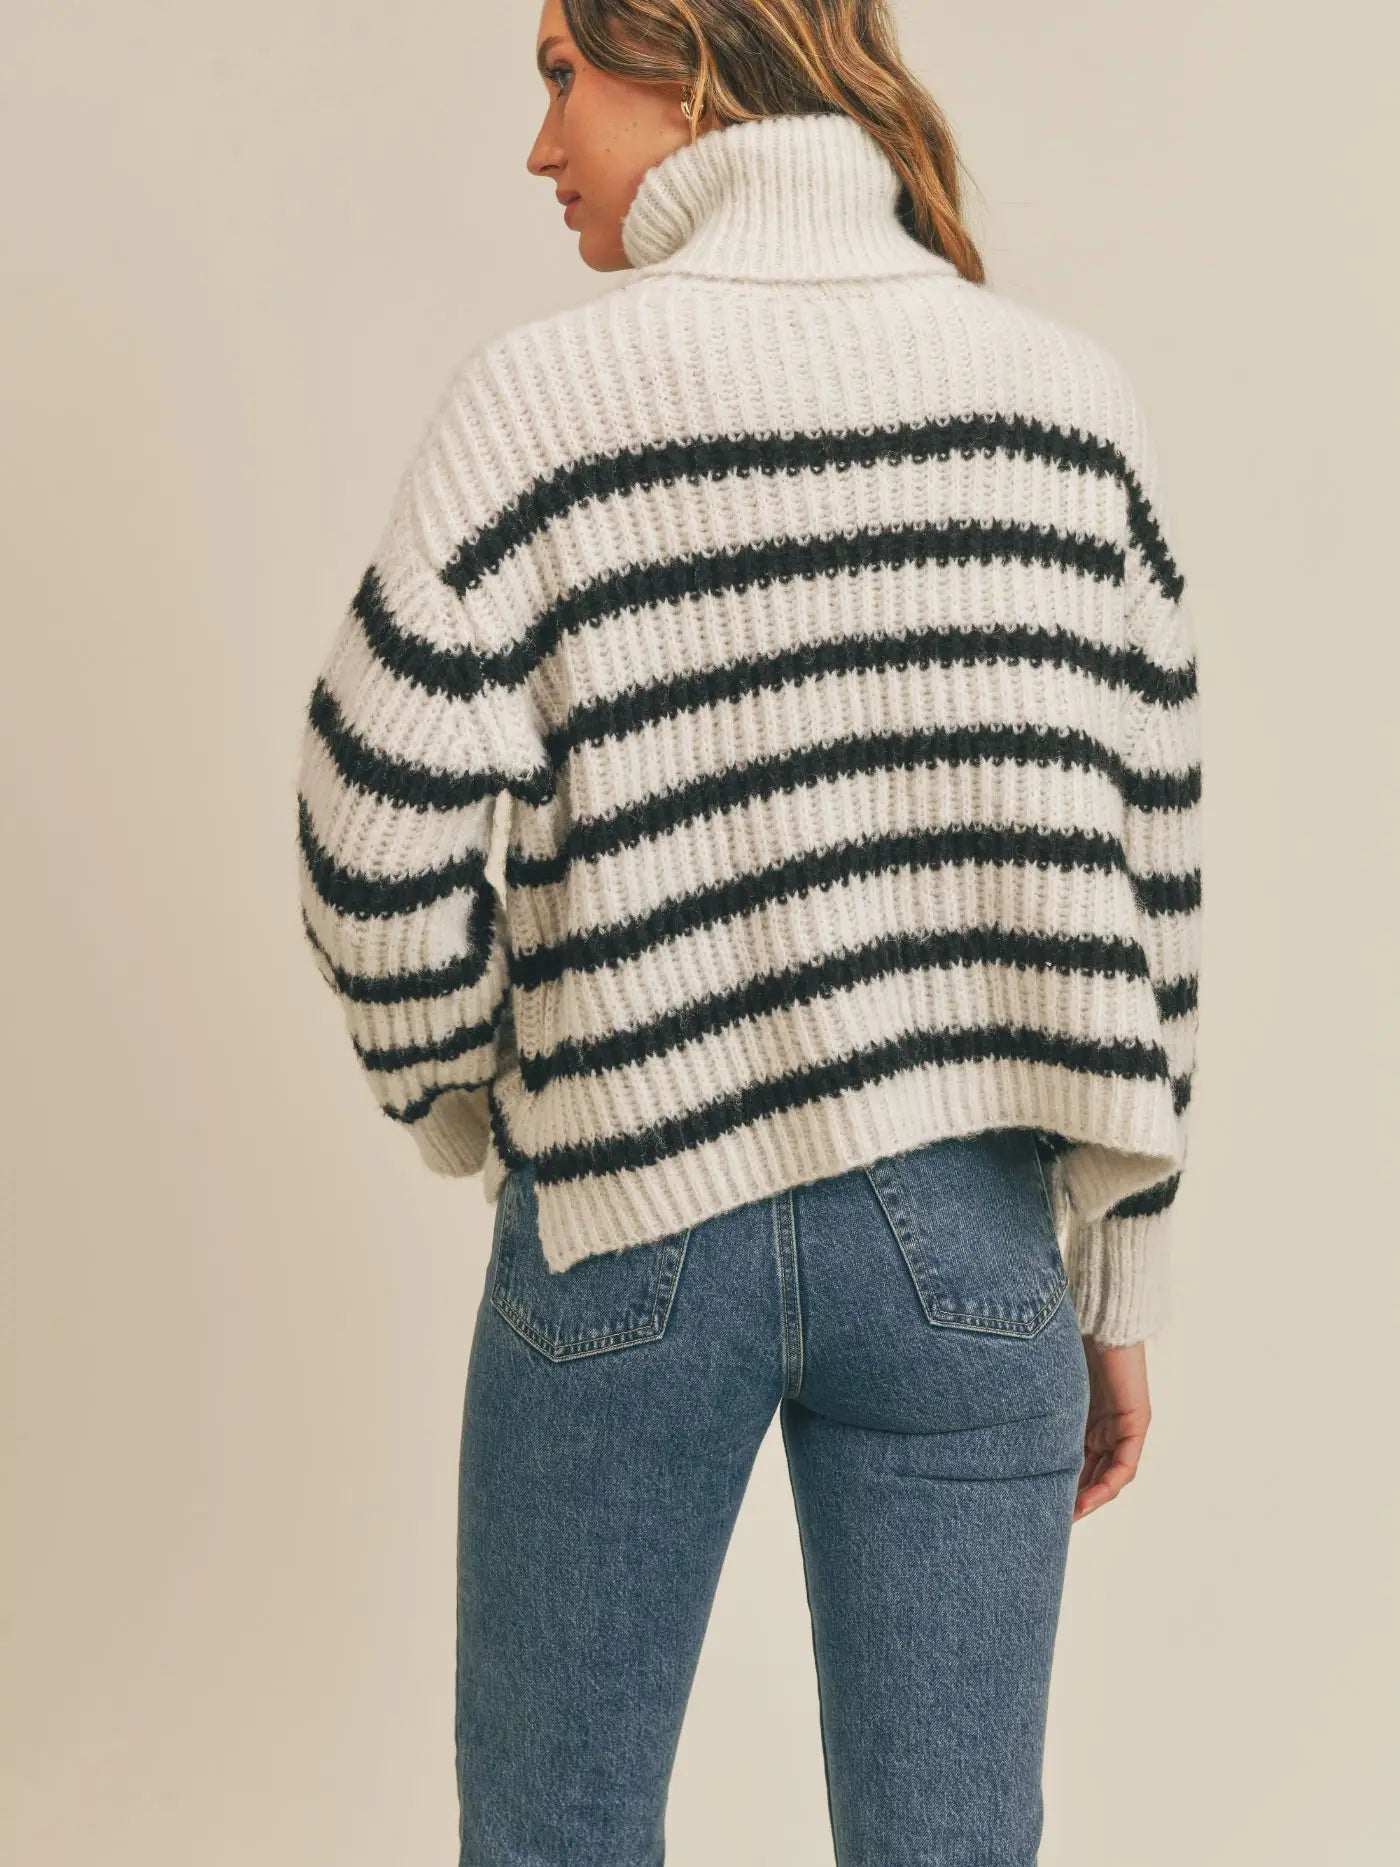 The Aki Turtleneck Sweater